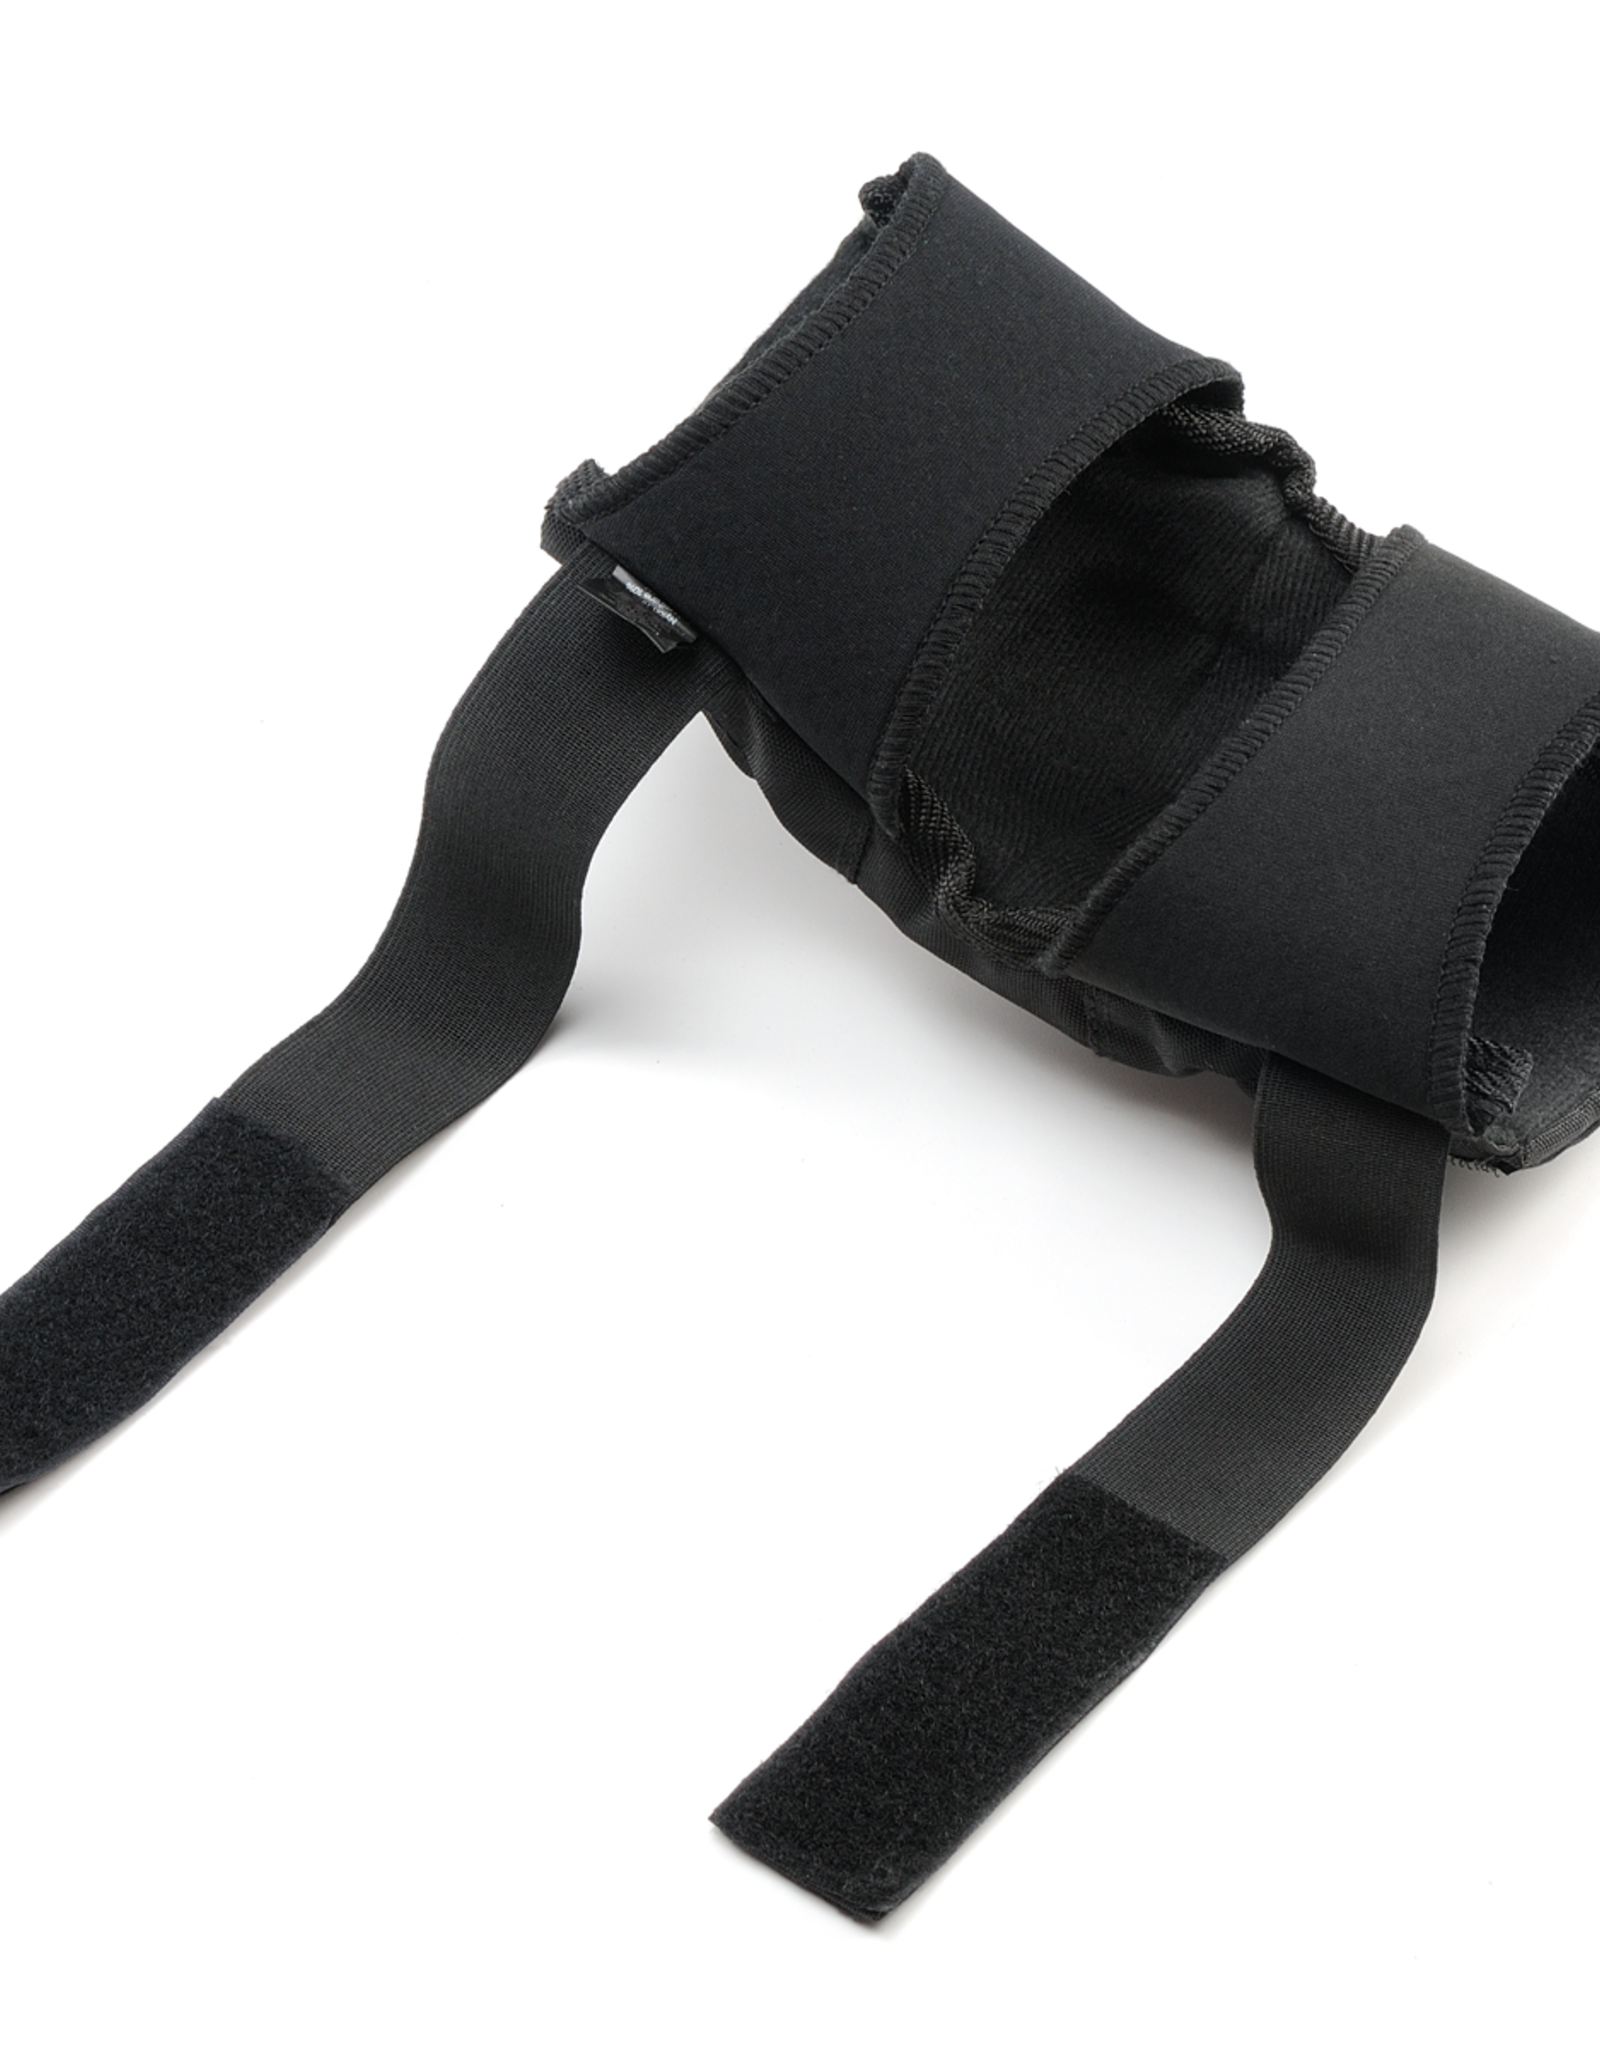 Pro Tec Deluxe Neoprene Shoulder Strap Pad with Non-Slip